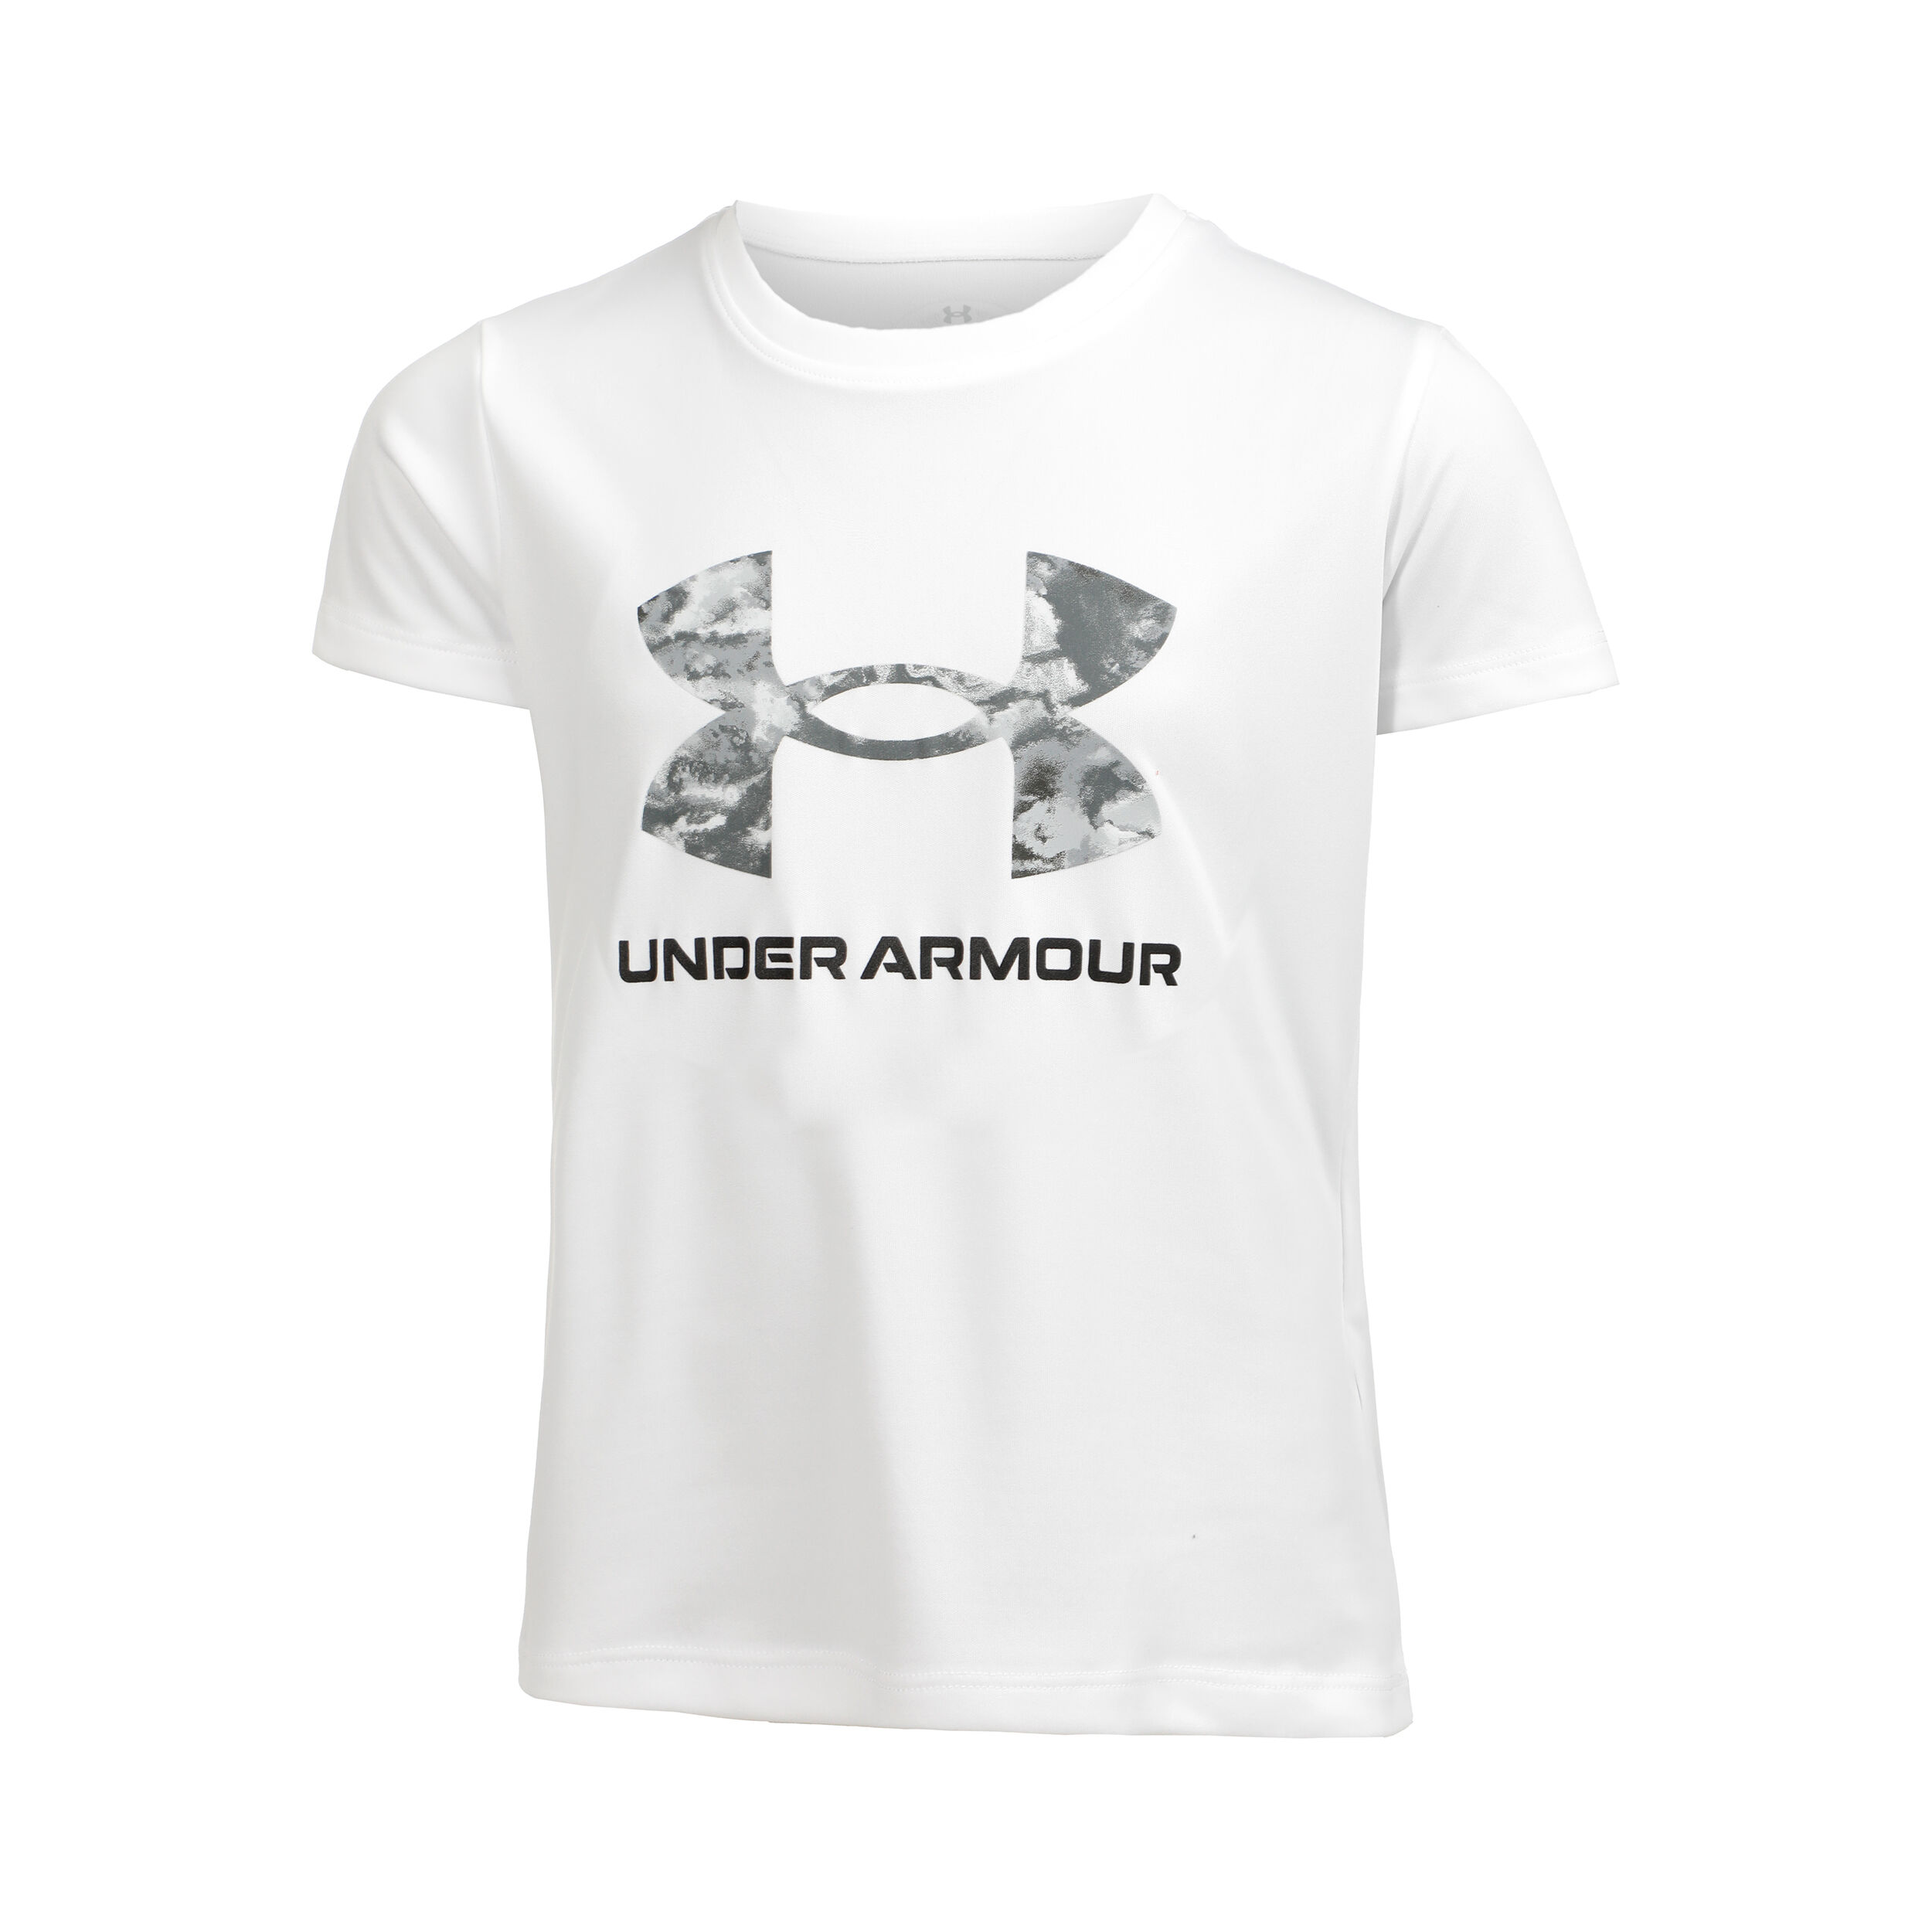 Buy Under Armour Tech Print Big Logo T-Shirt Girls White, Black